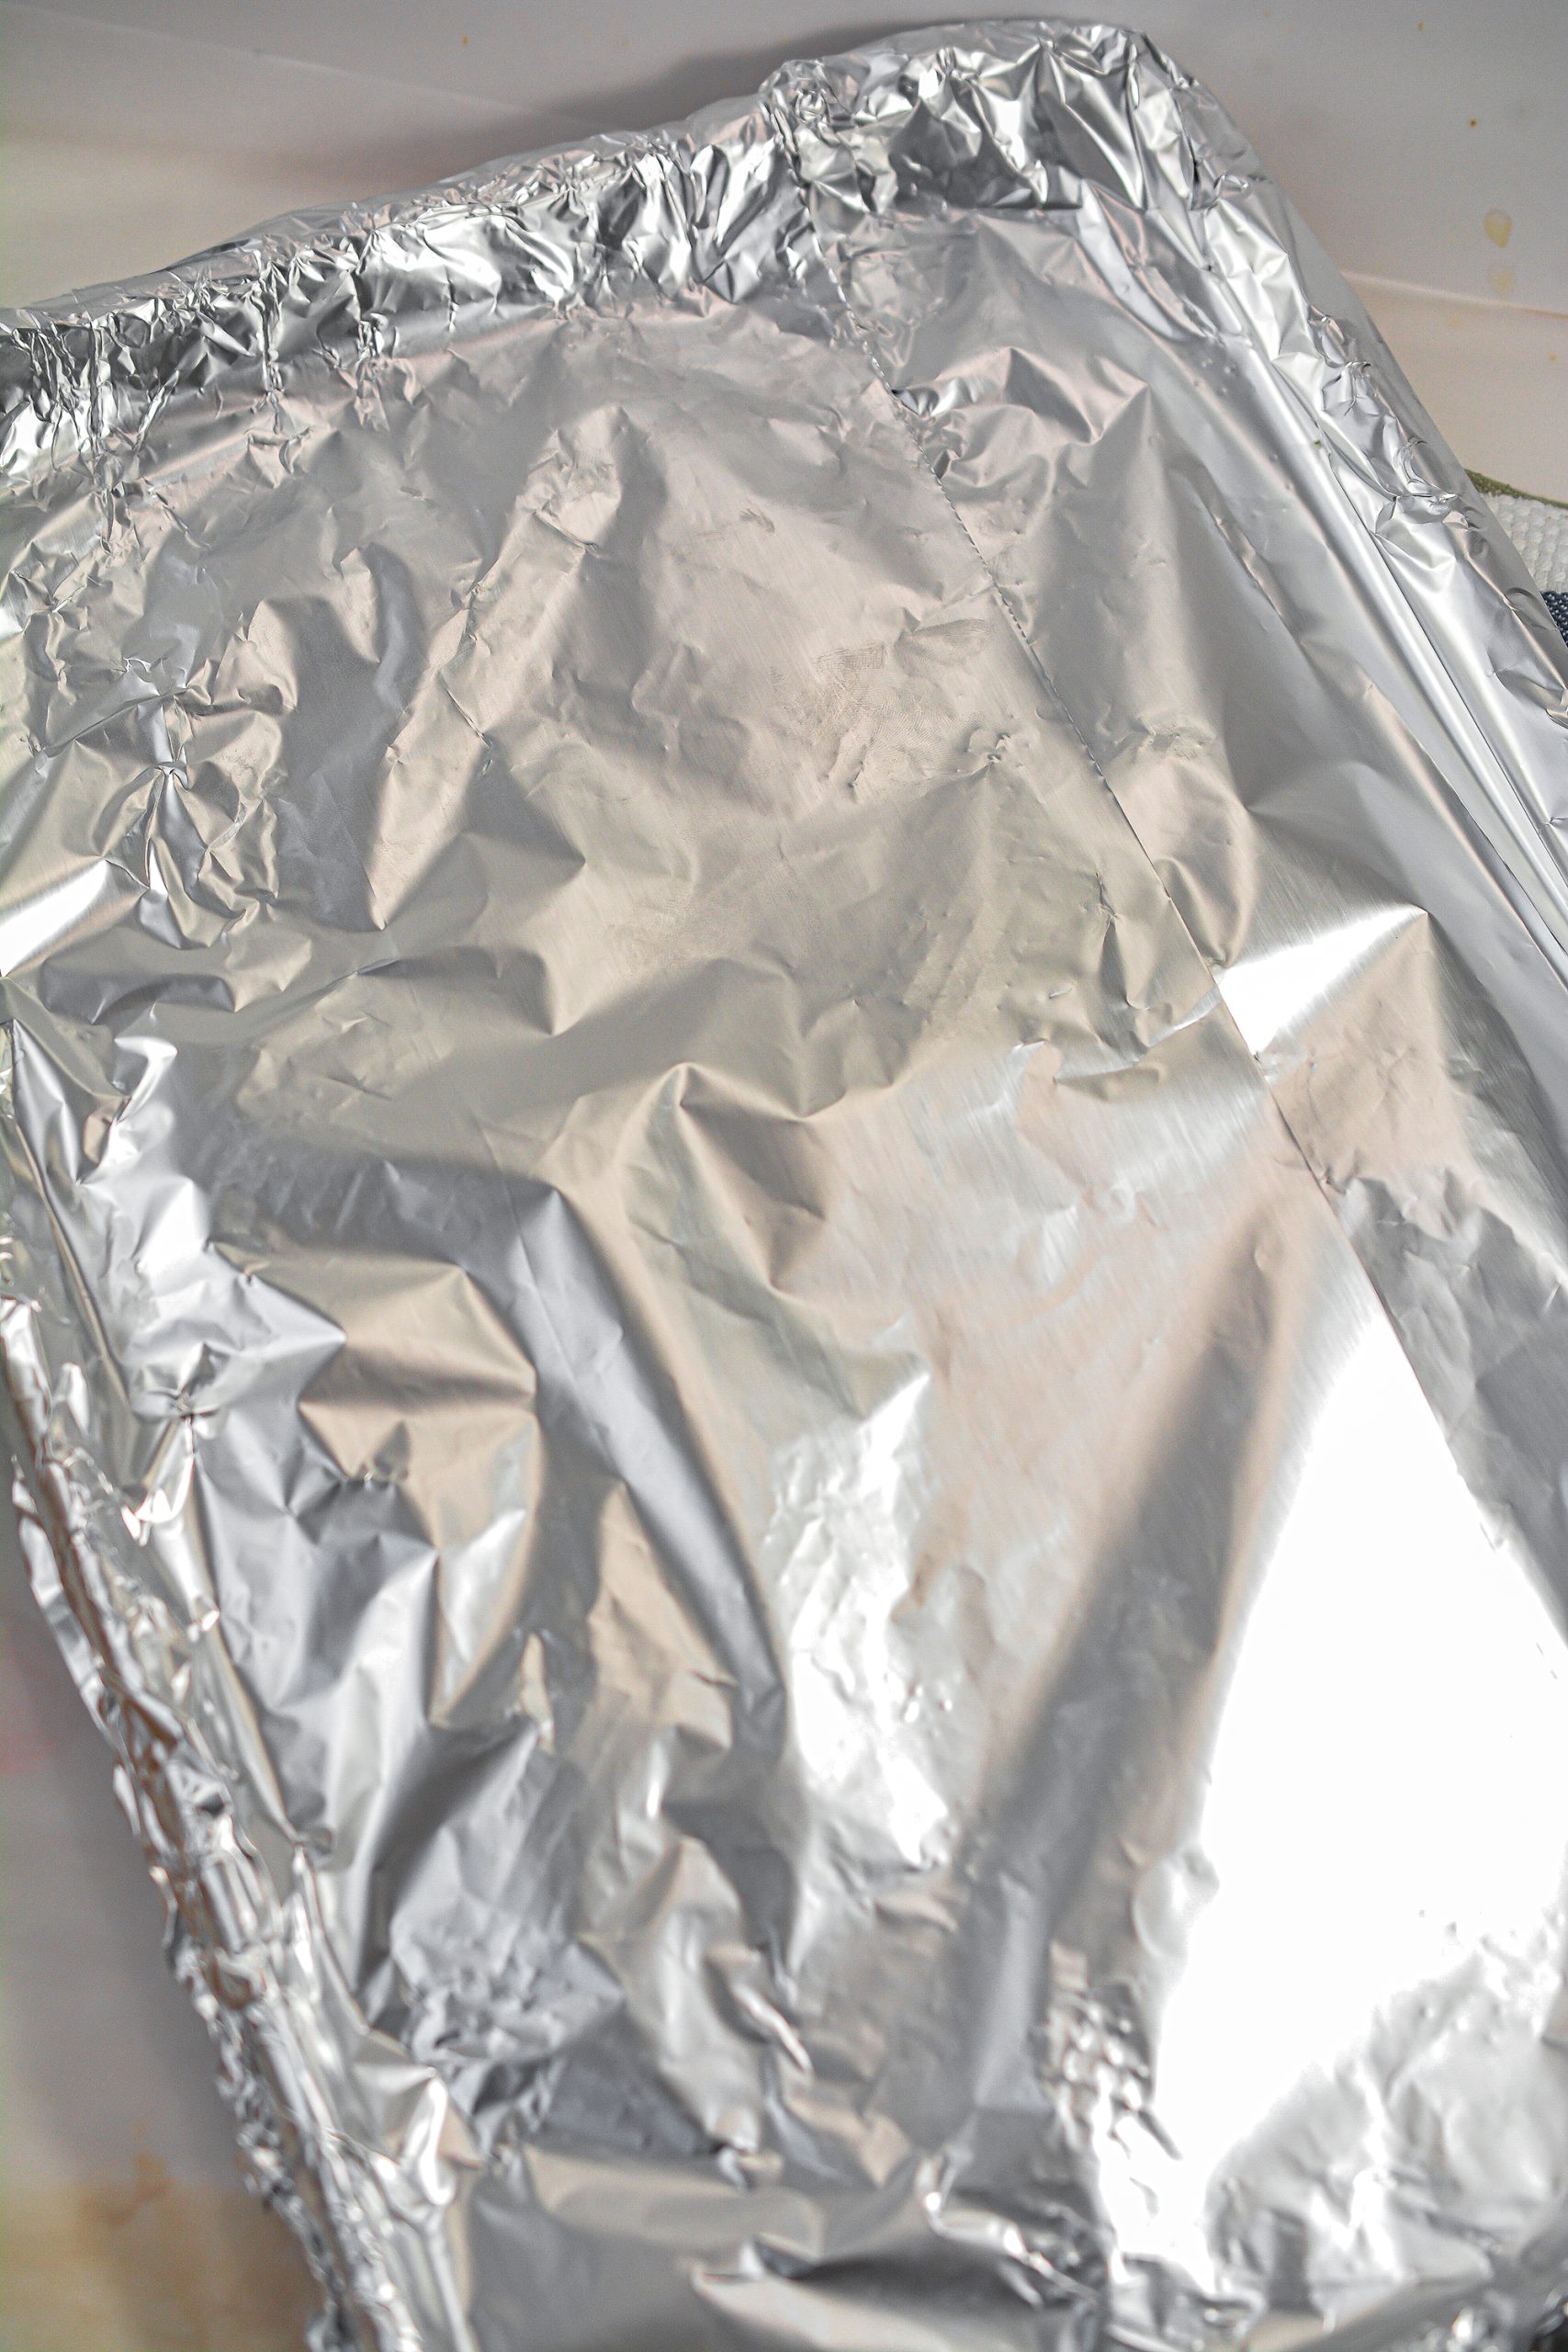 Line a baking sheet with aluminum foil.